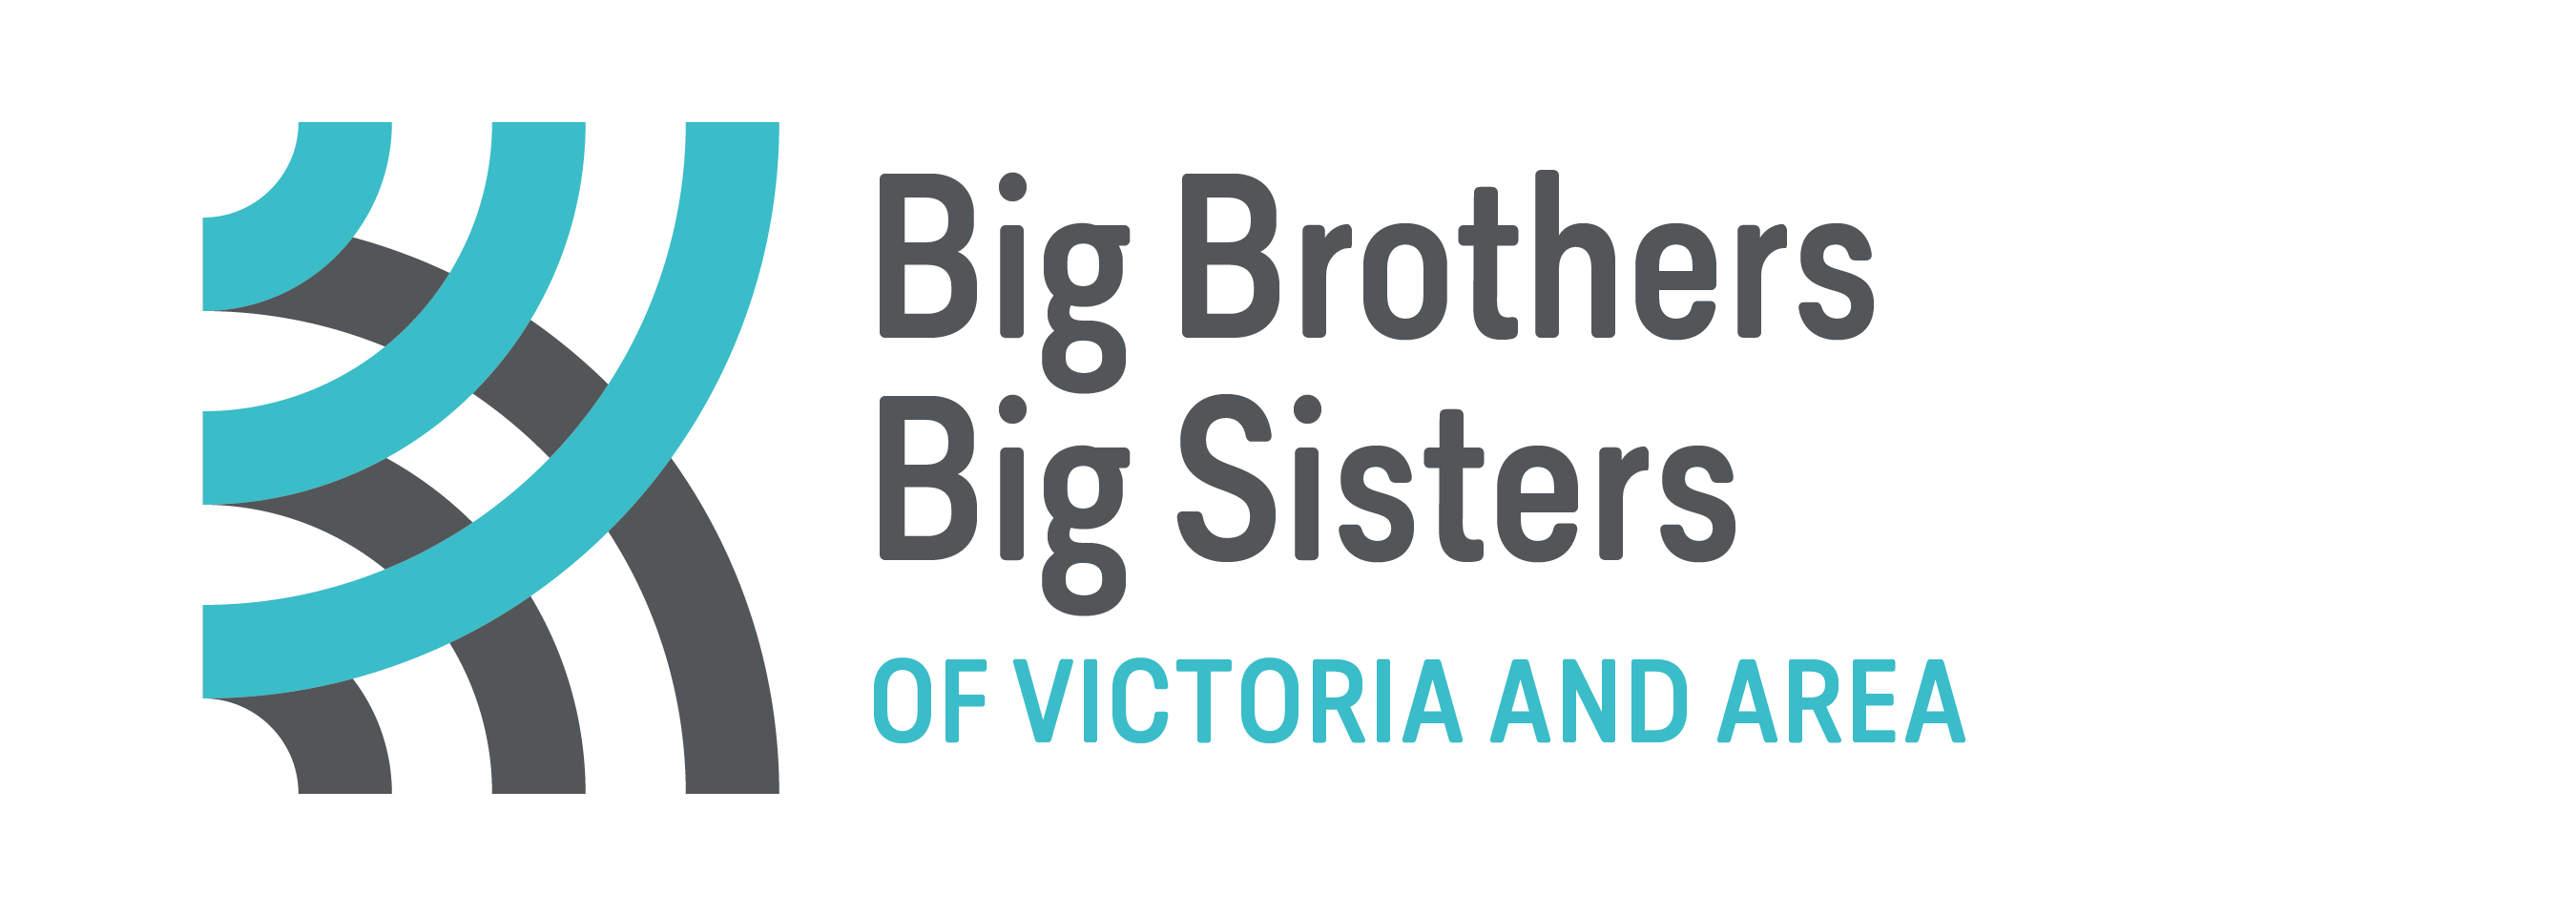 Big Brothers Big Sisters of Victoria Capital Region logo